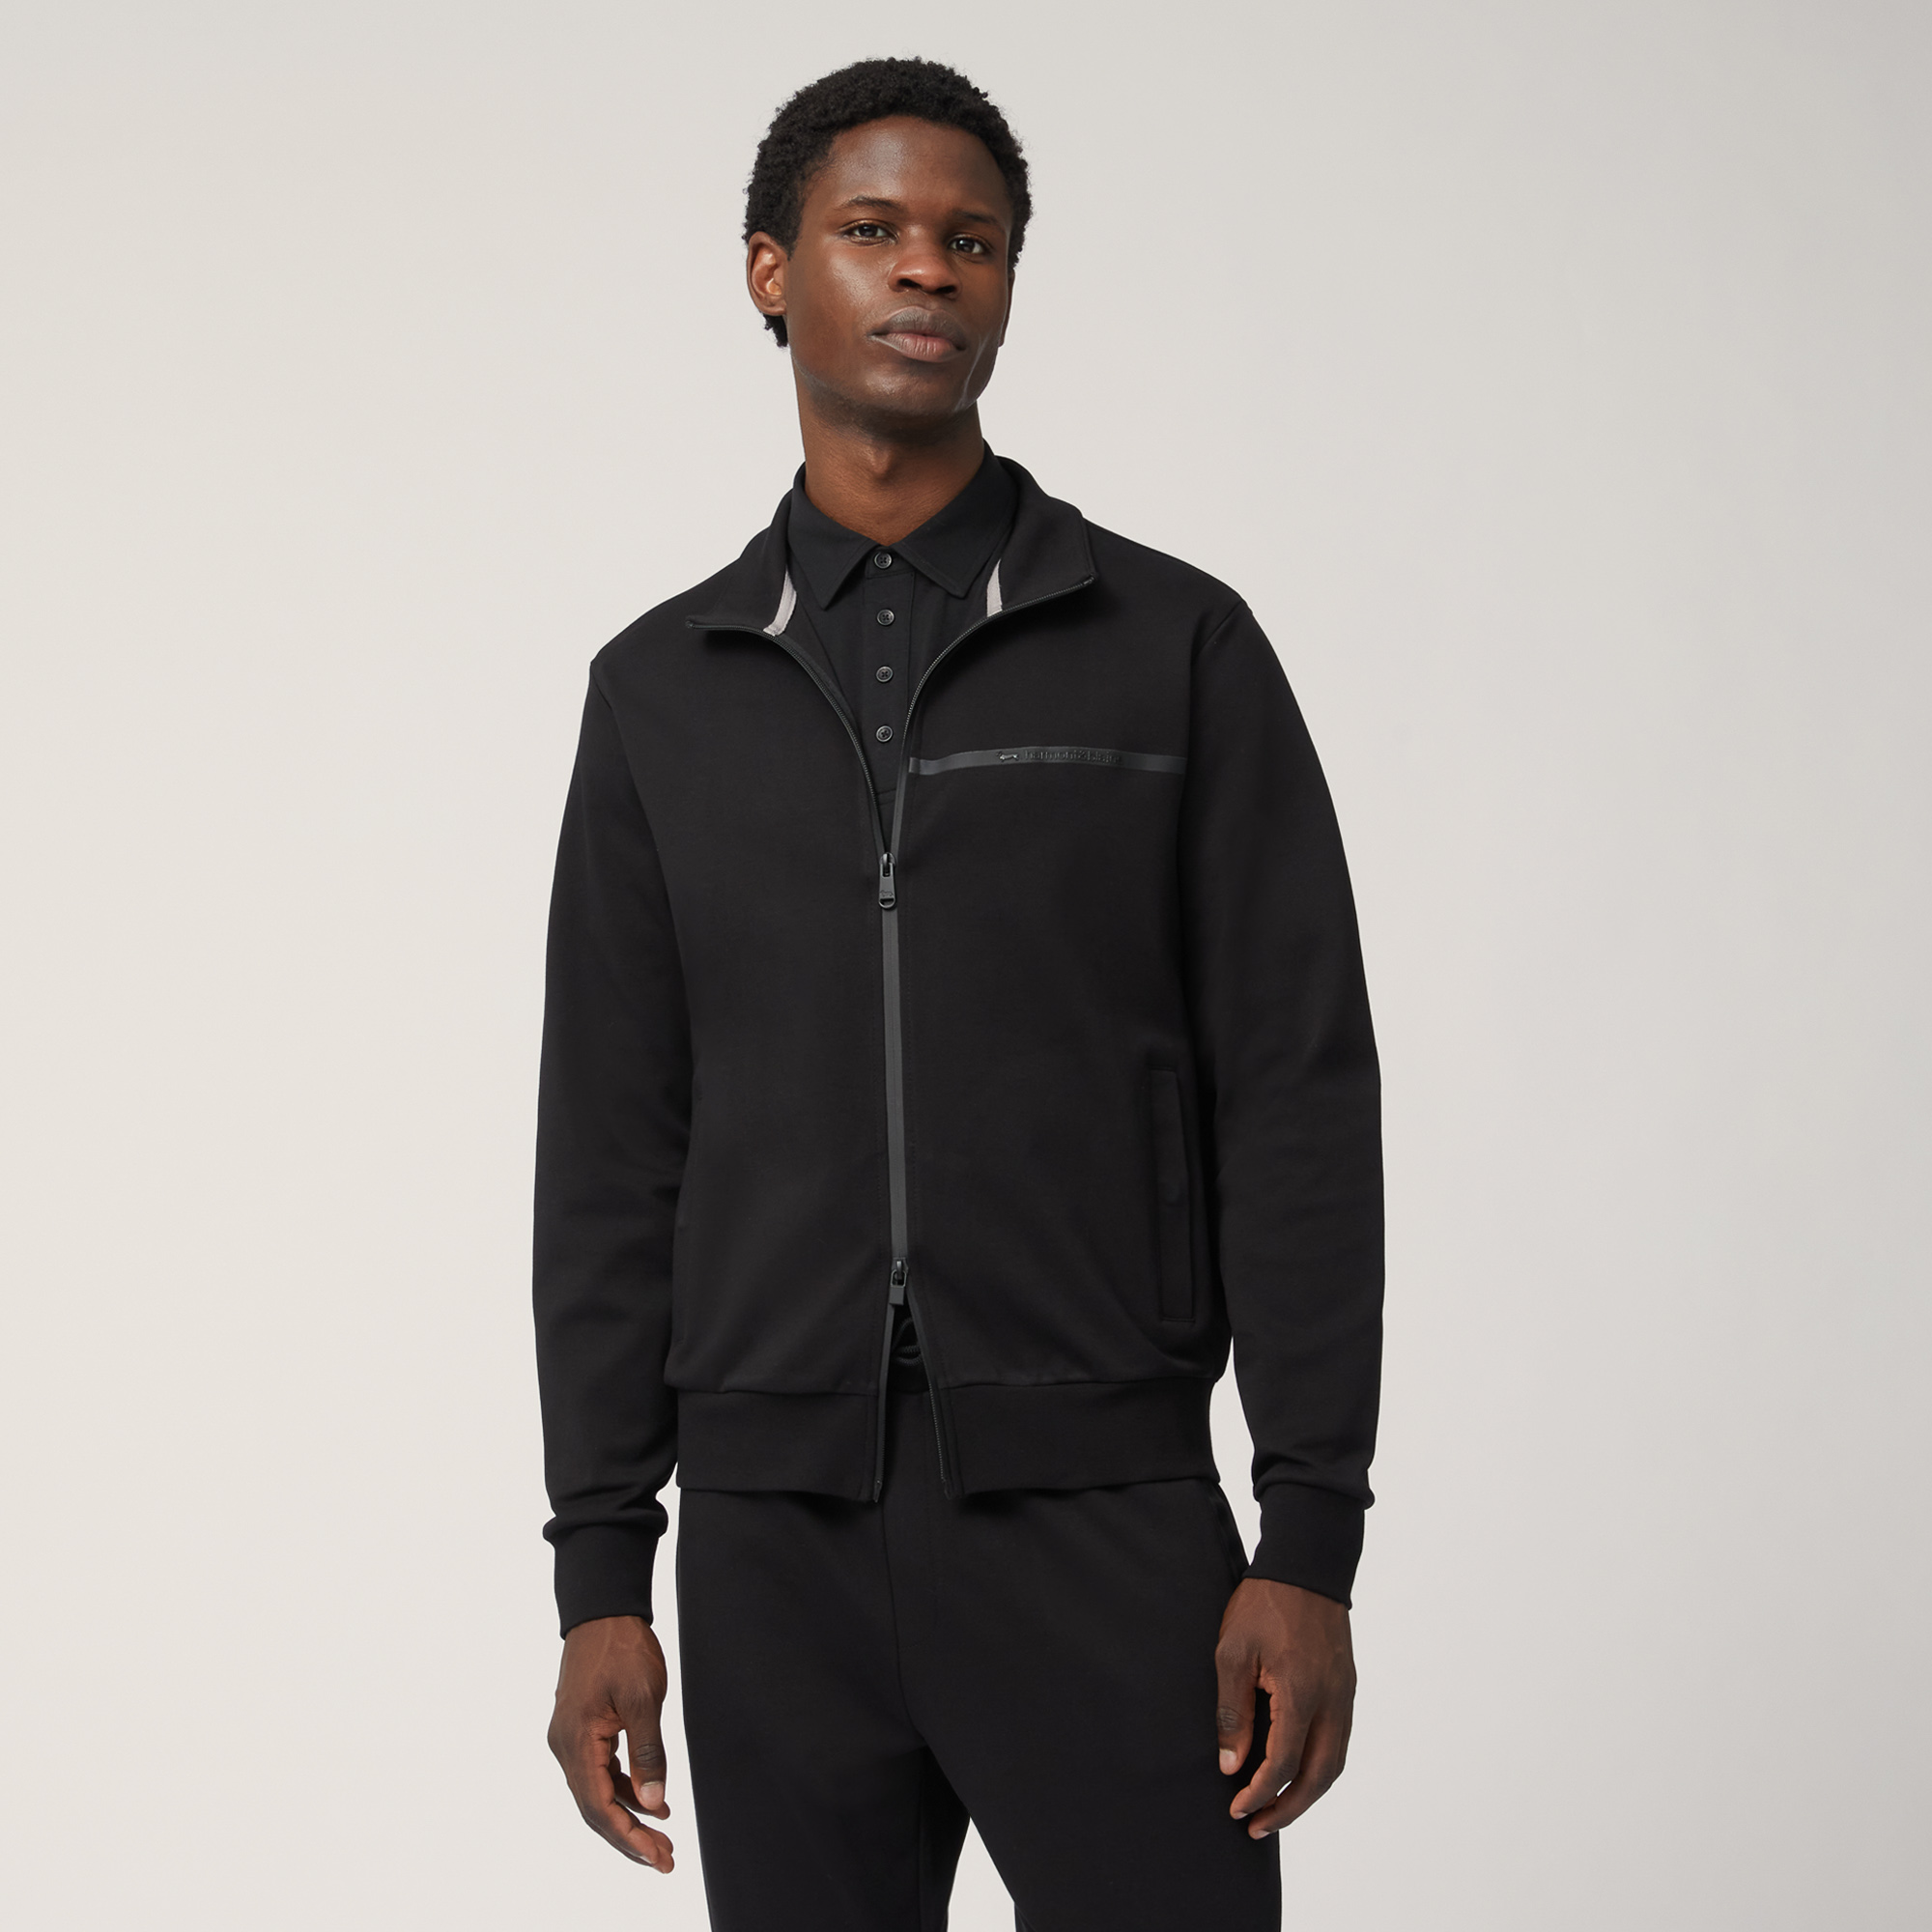 Cotton Full-Zip Sweatshirt with Heat-Sealed Details, Black, large